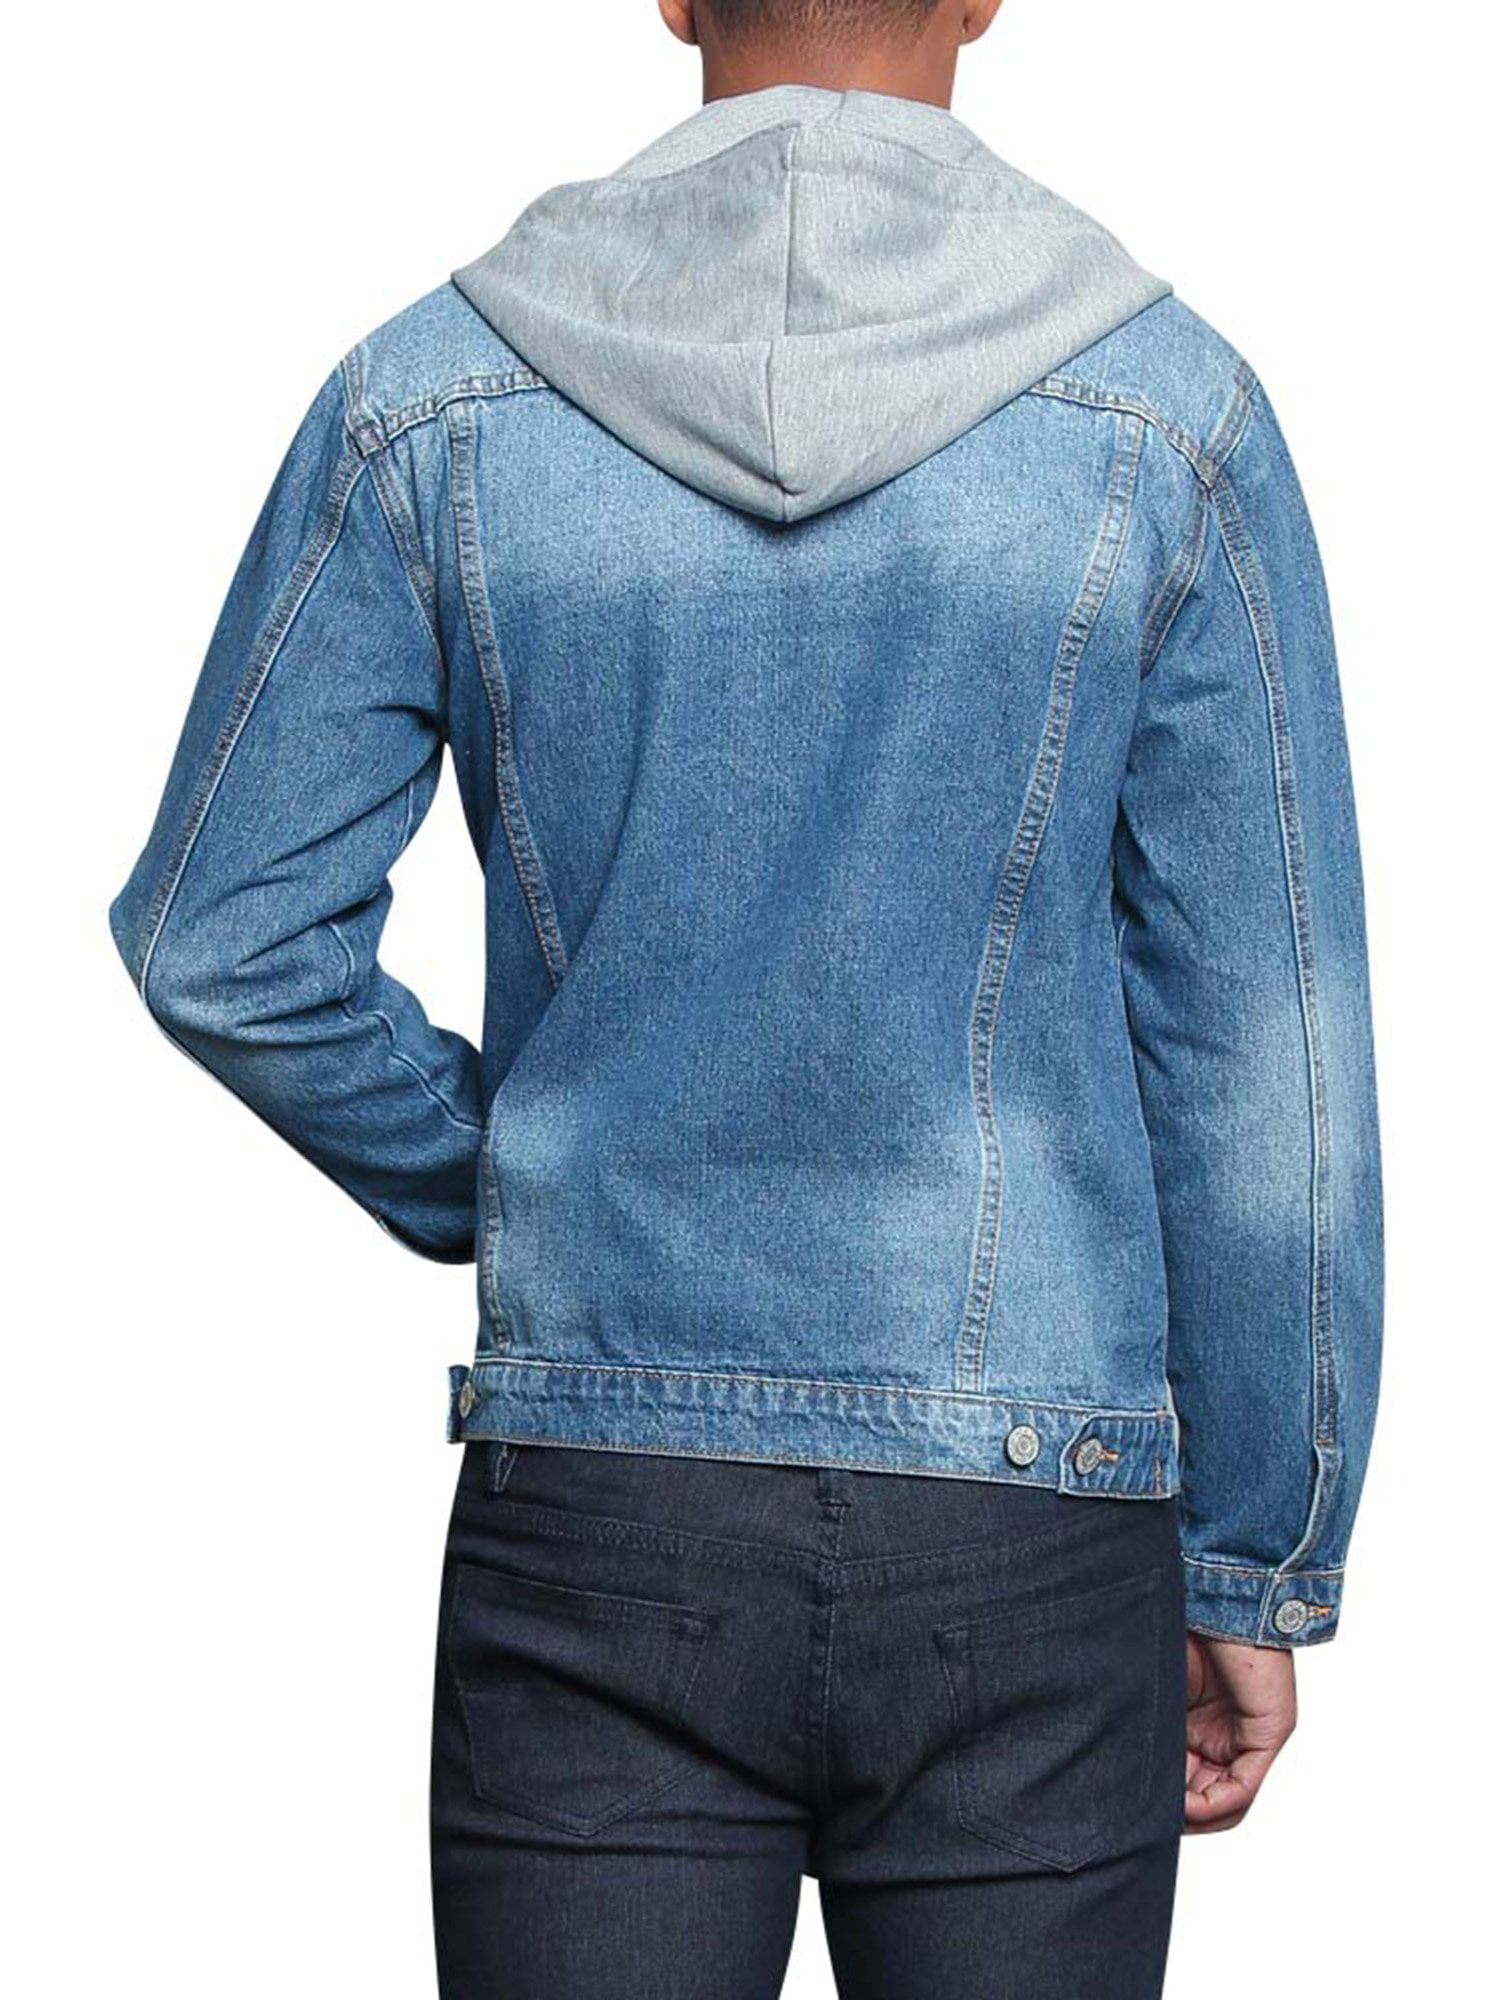 Victorious Men\'s Detachable Hood Layered Look Distressed Denim Jacket DK135  - Indigo - 3X-Large